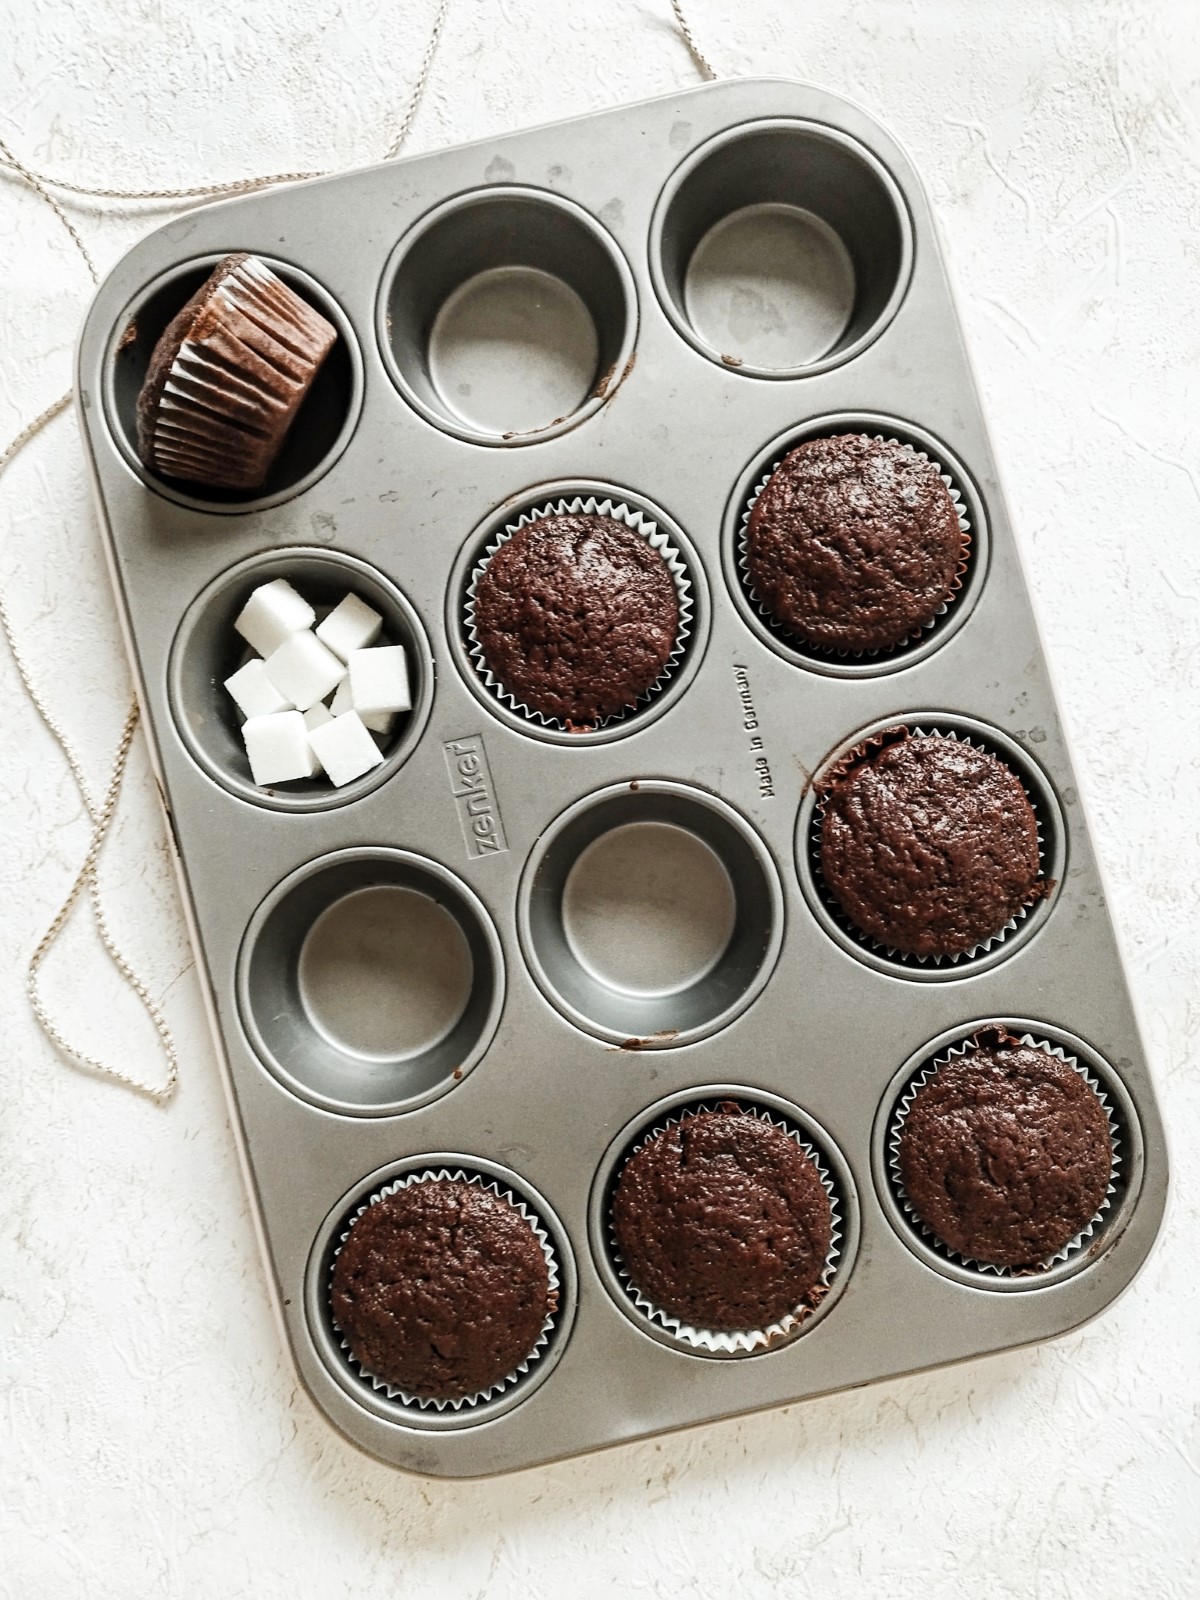 Zucchini-Muffins mit Schokolade - Zucchini Muffins with chocolate in a muffin tray